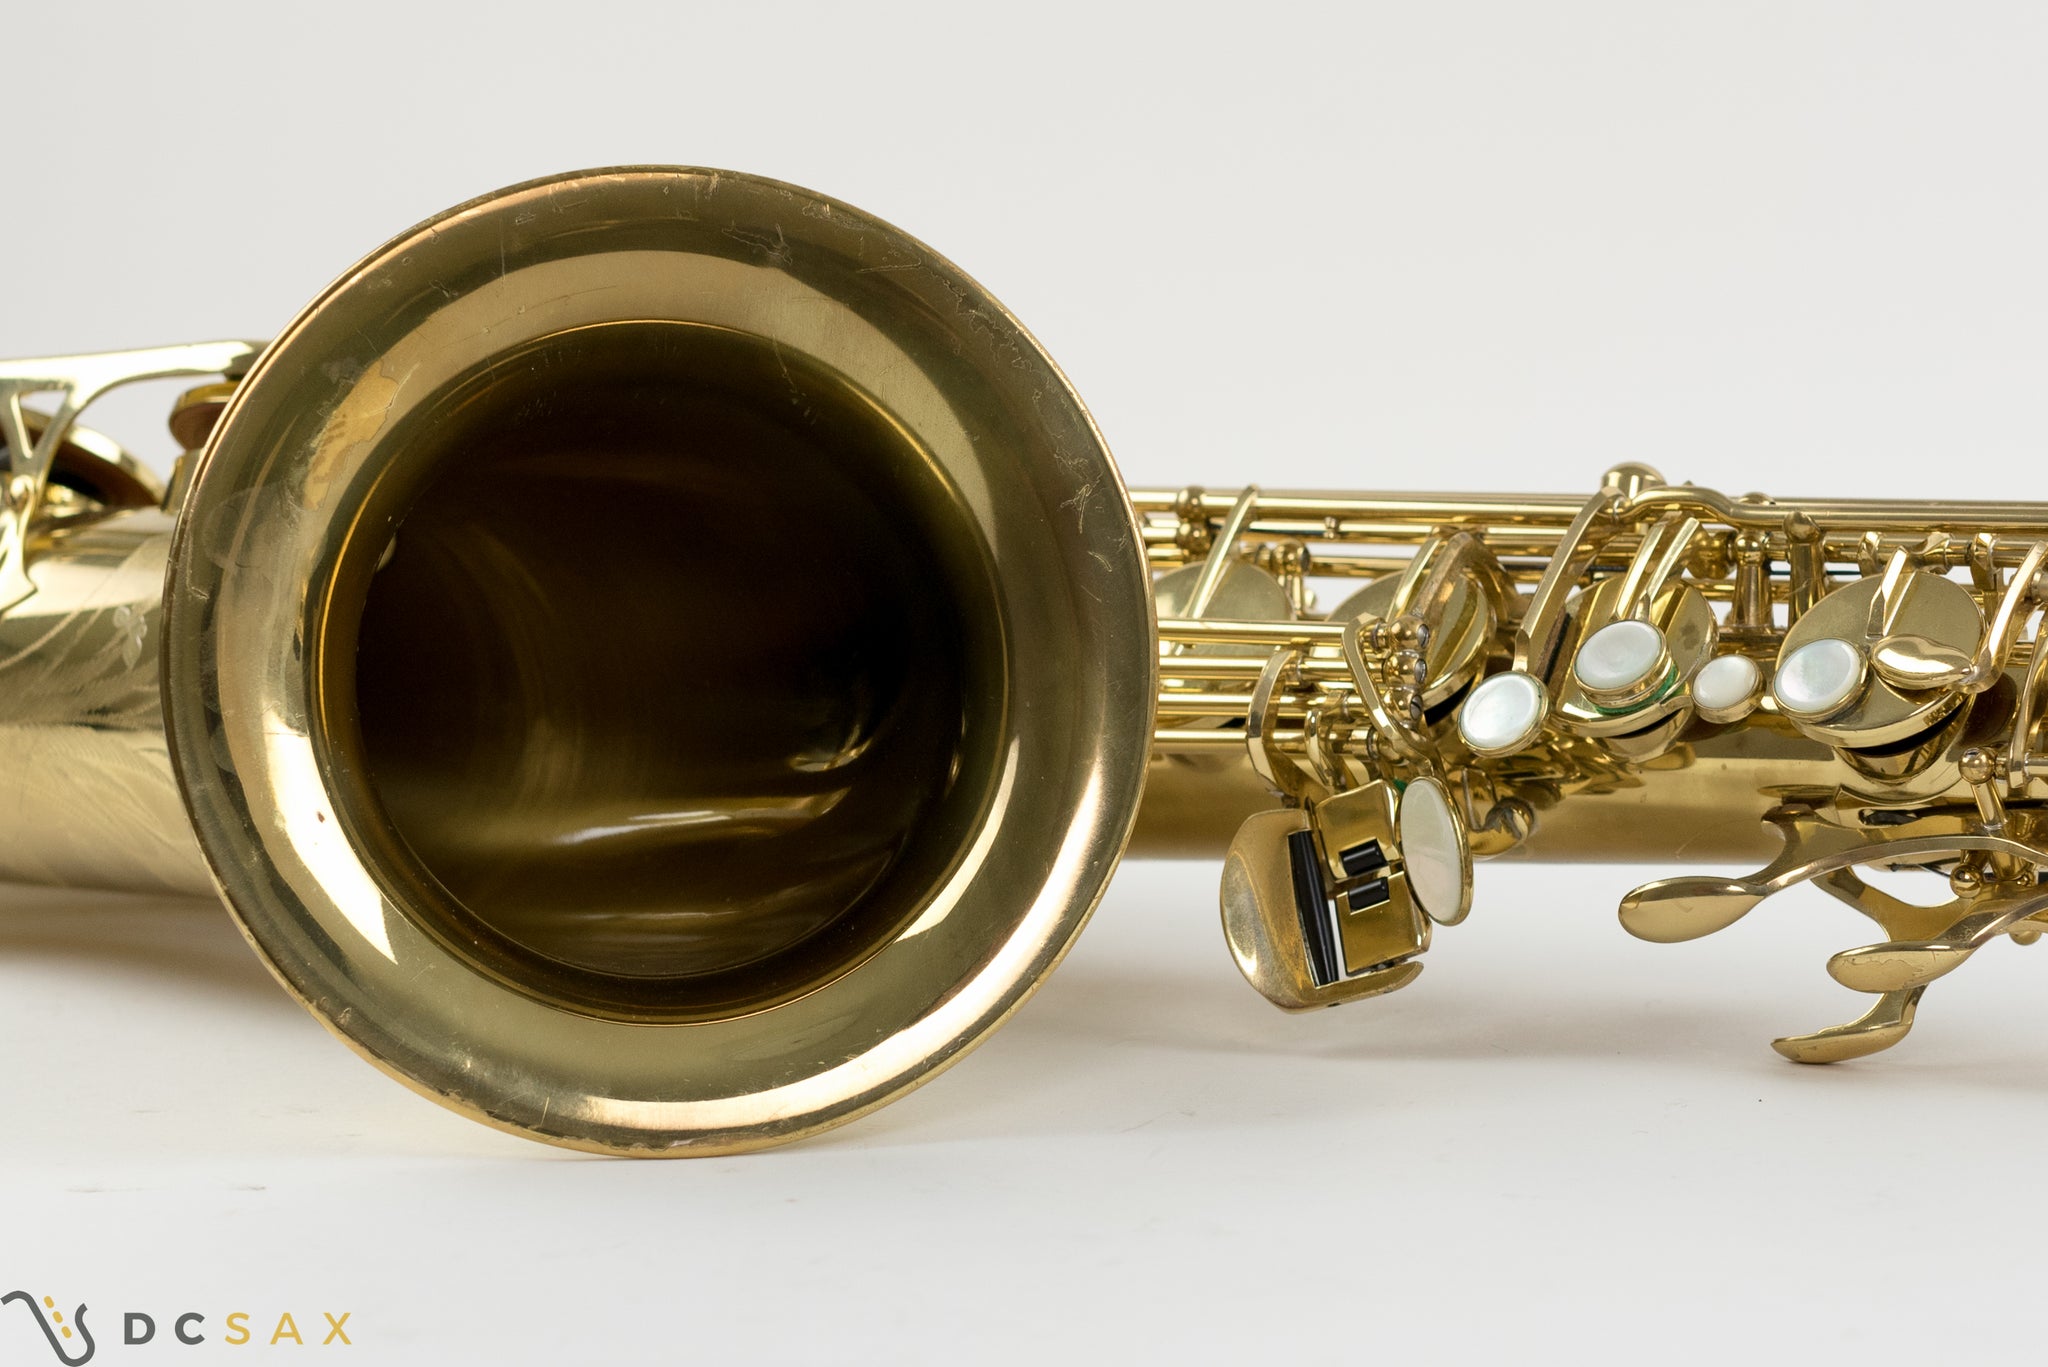 Selmer Series III Tenor Saxophone, Just Serviced, New Bam Case